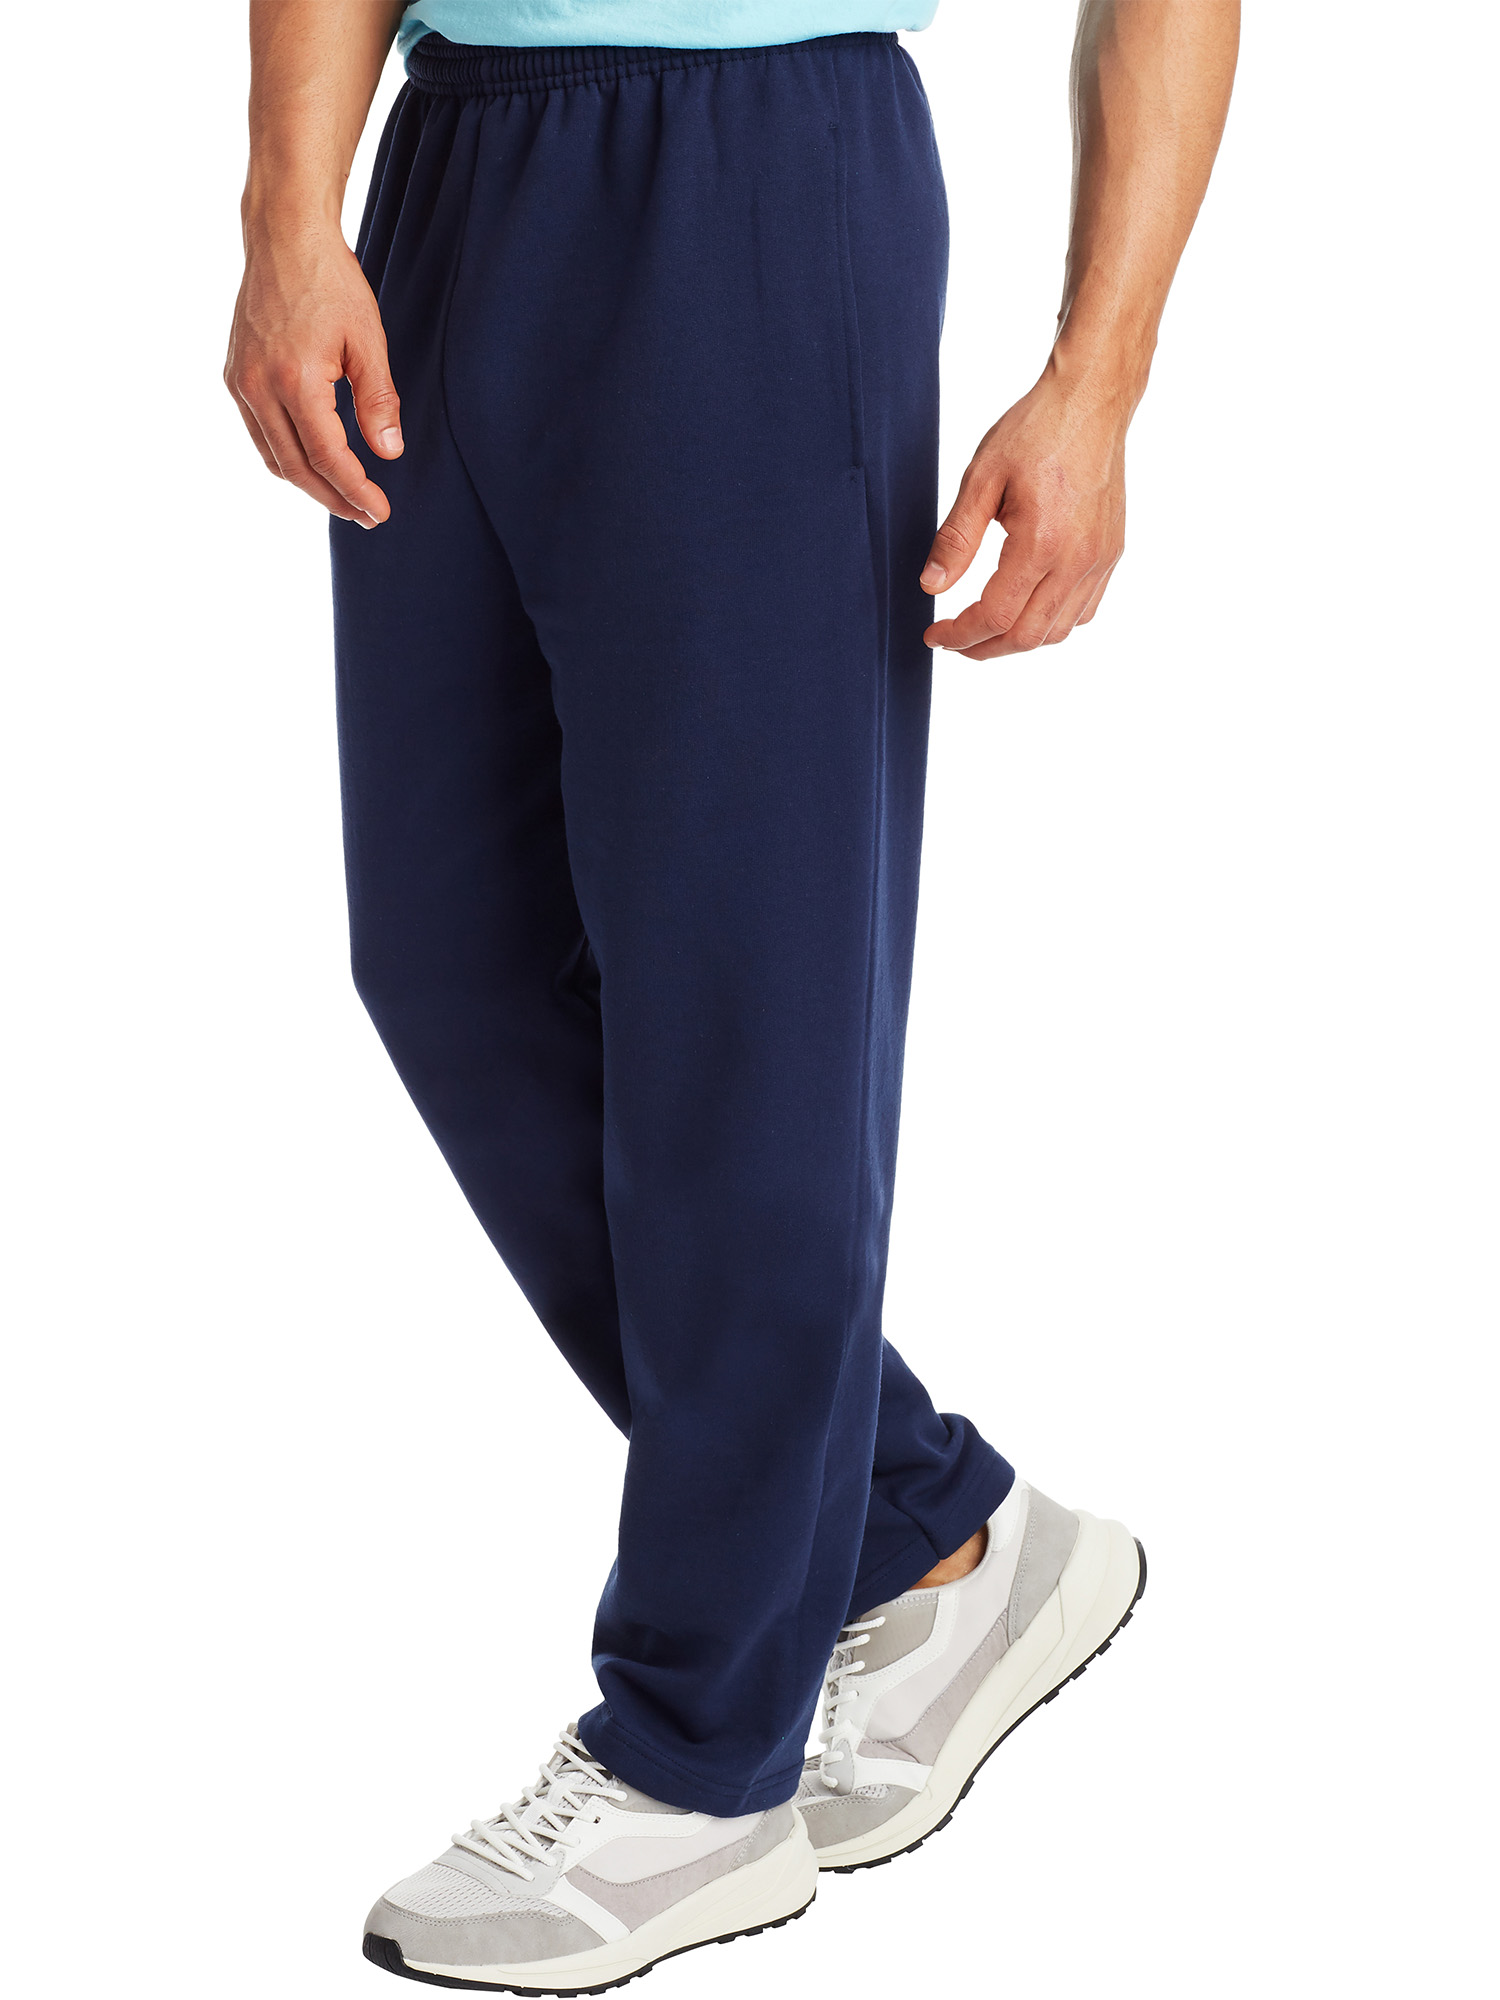 Hanes Men's and Big Men's EcoSmart Fleece Sweatpants with Pockets, Sizes S-3XL - image 3 of 5